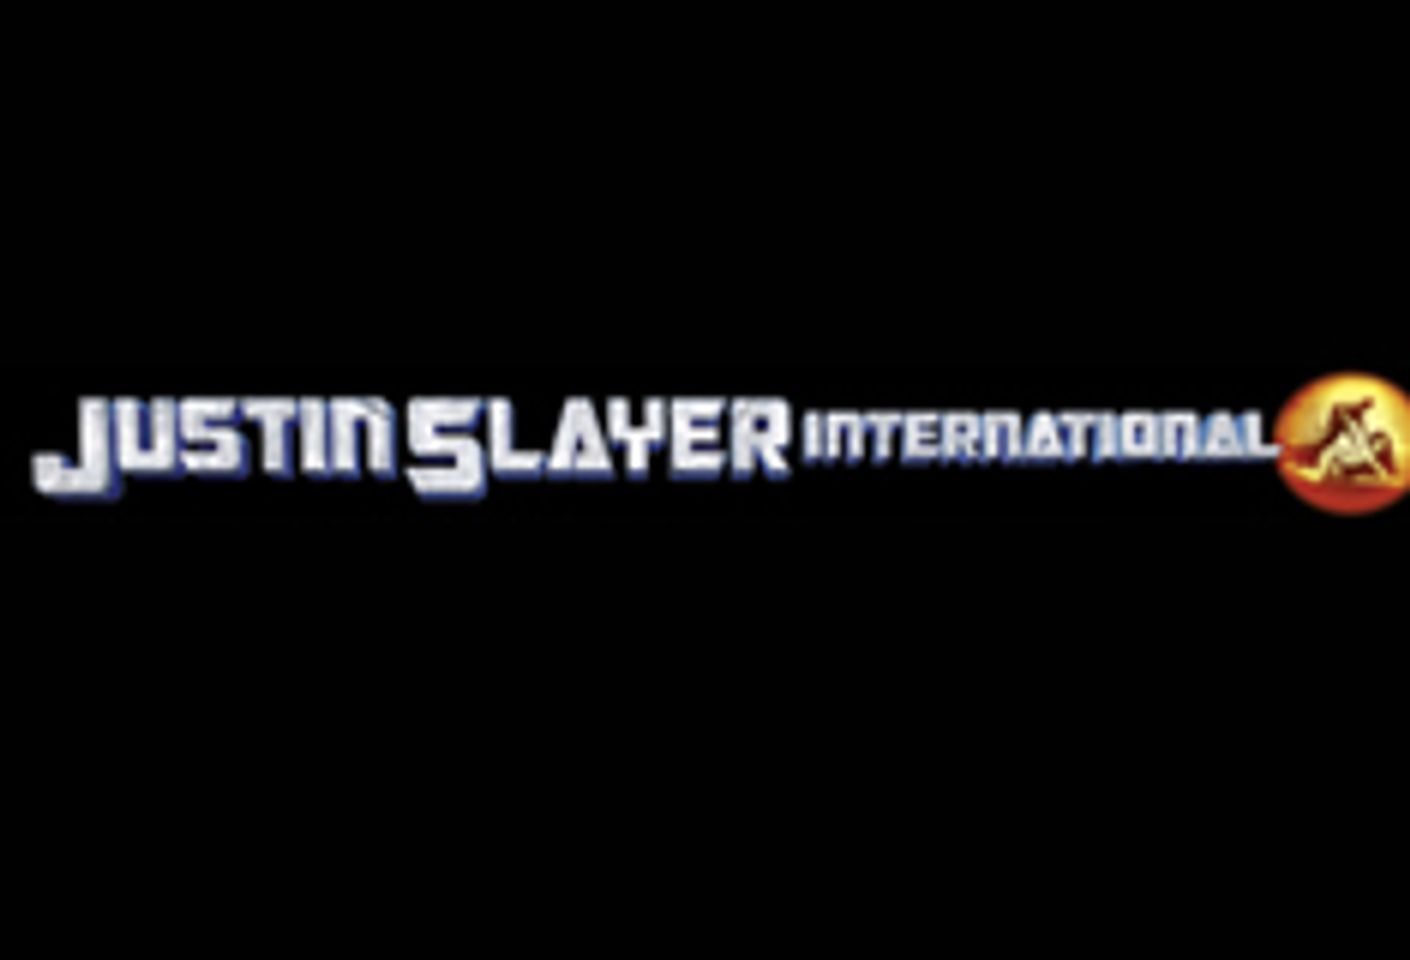 Justin Slayer International, Excubitor Unite to Fight Piracy